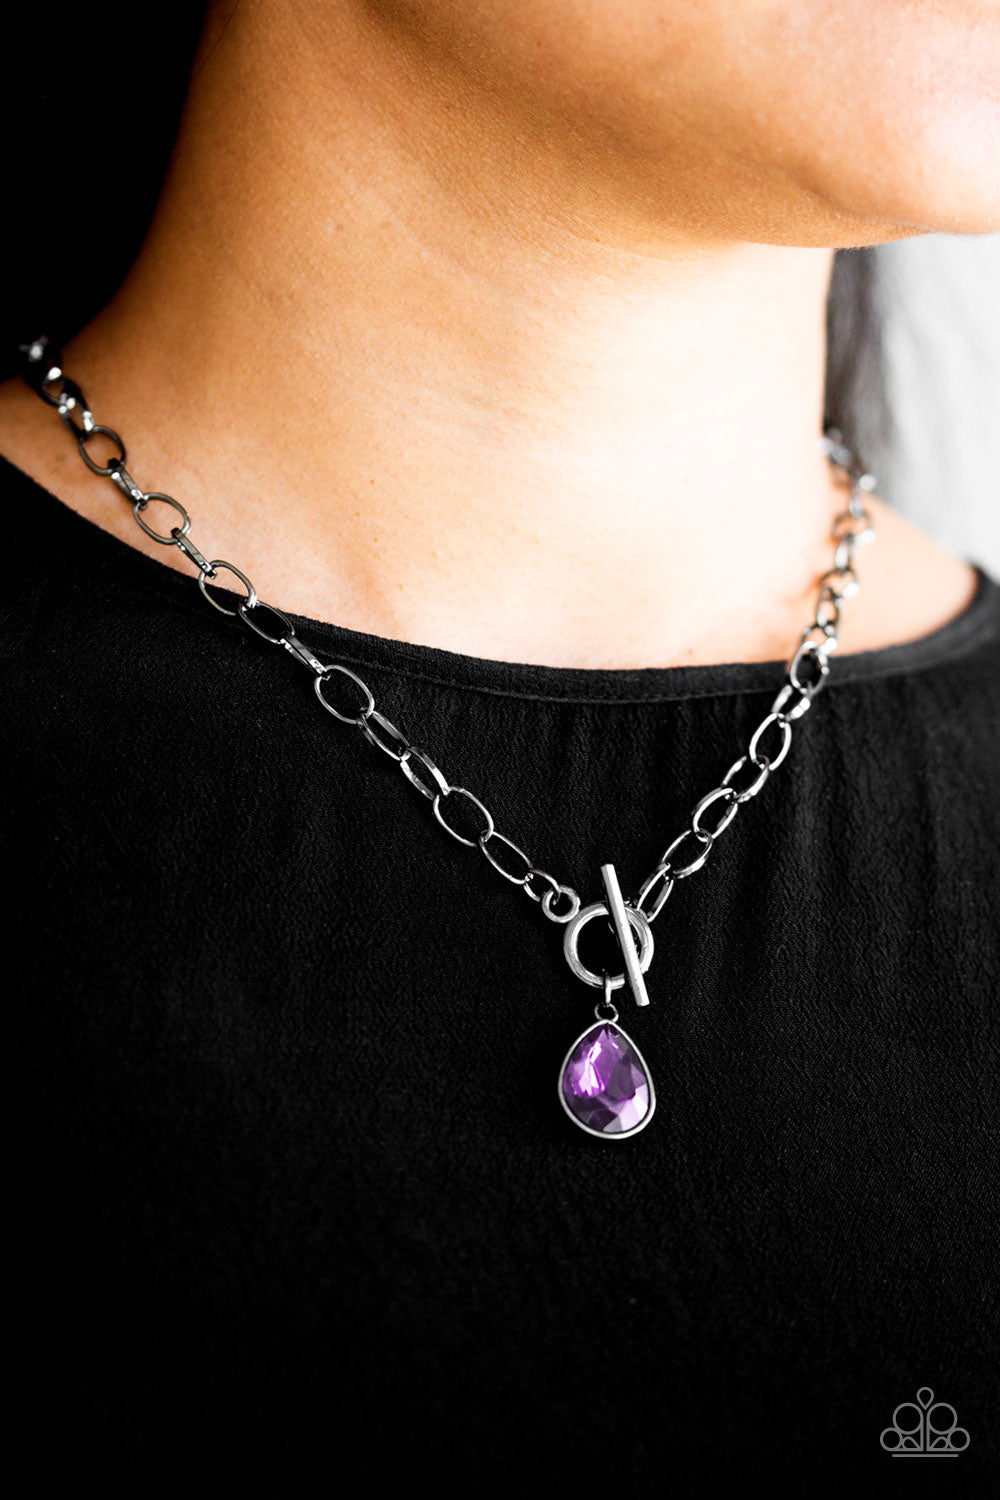 So Sorority Purple Necklace